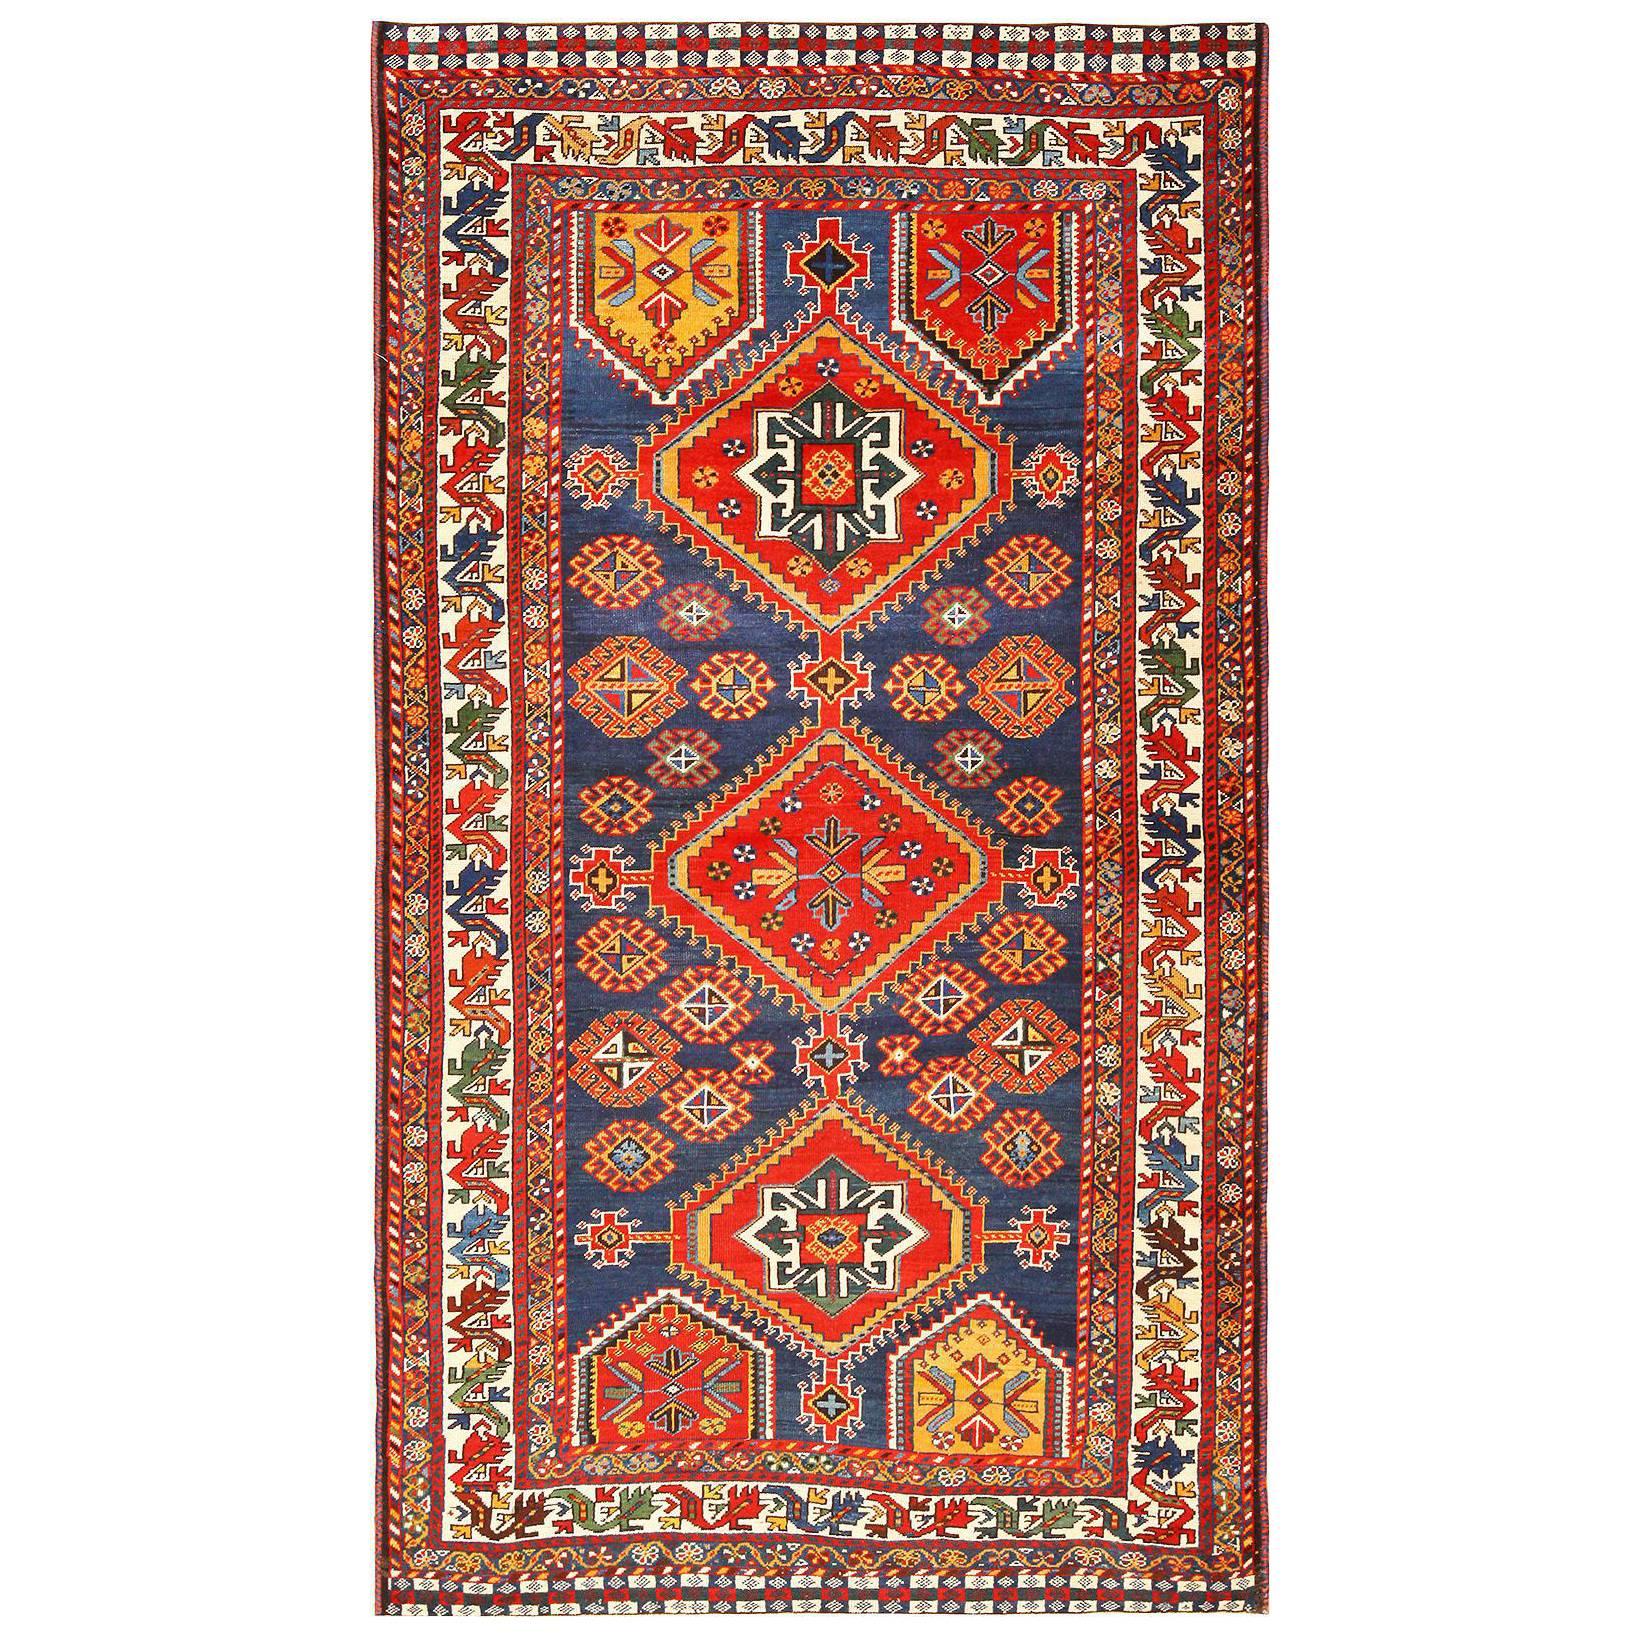 Beautiful Antique Tribal Persian Qashqai Rug